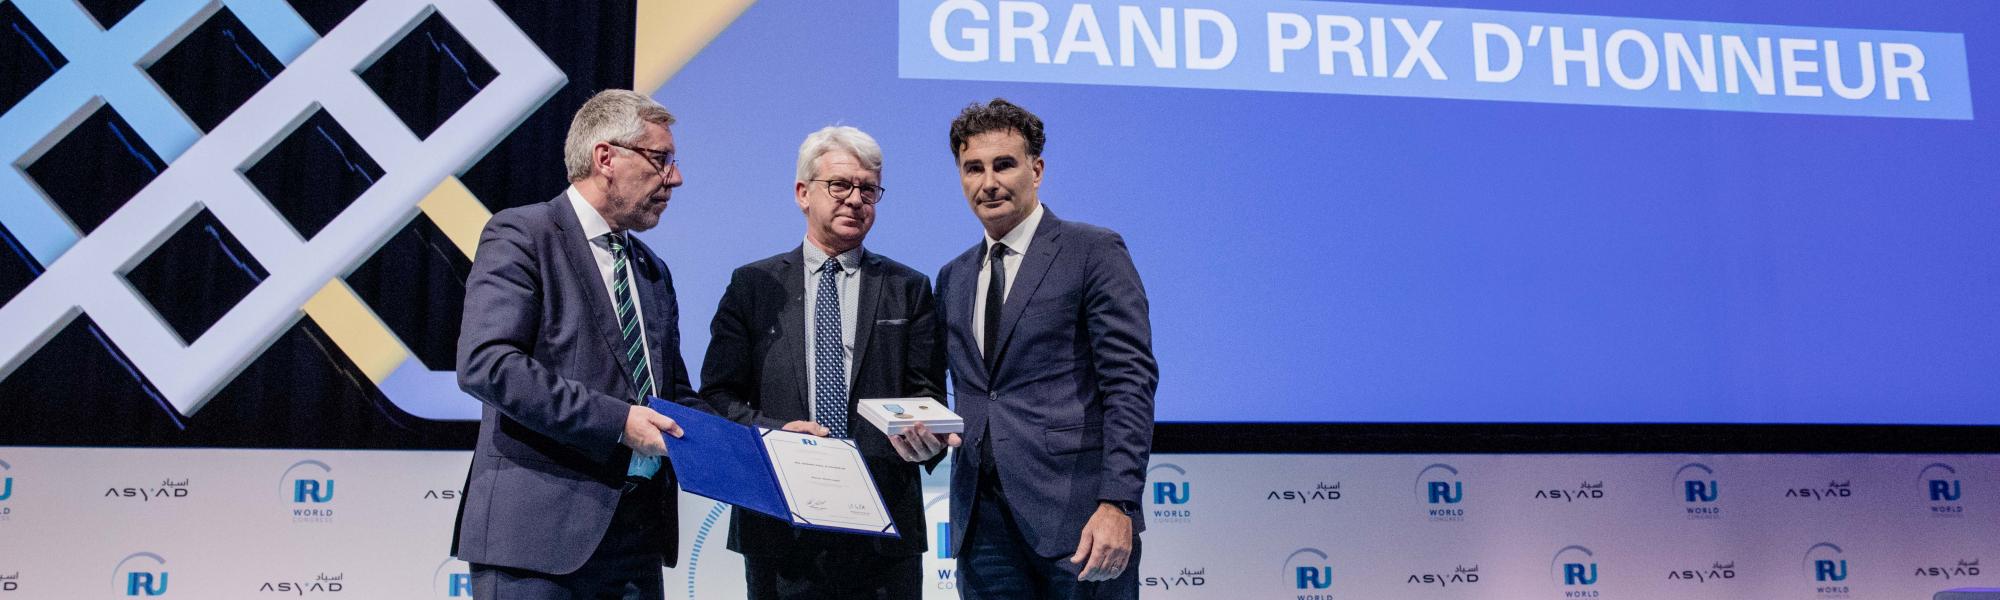 IRU announces recipient of Grand Prix d’Honneur 